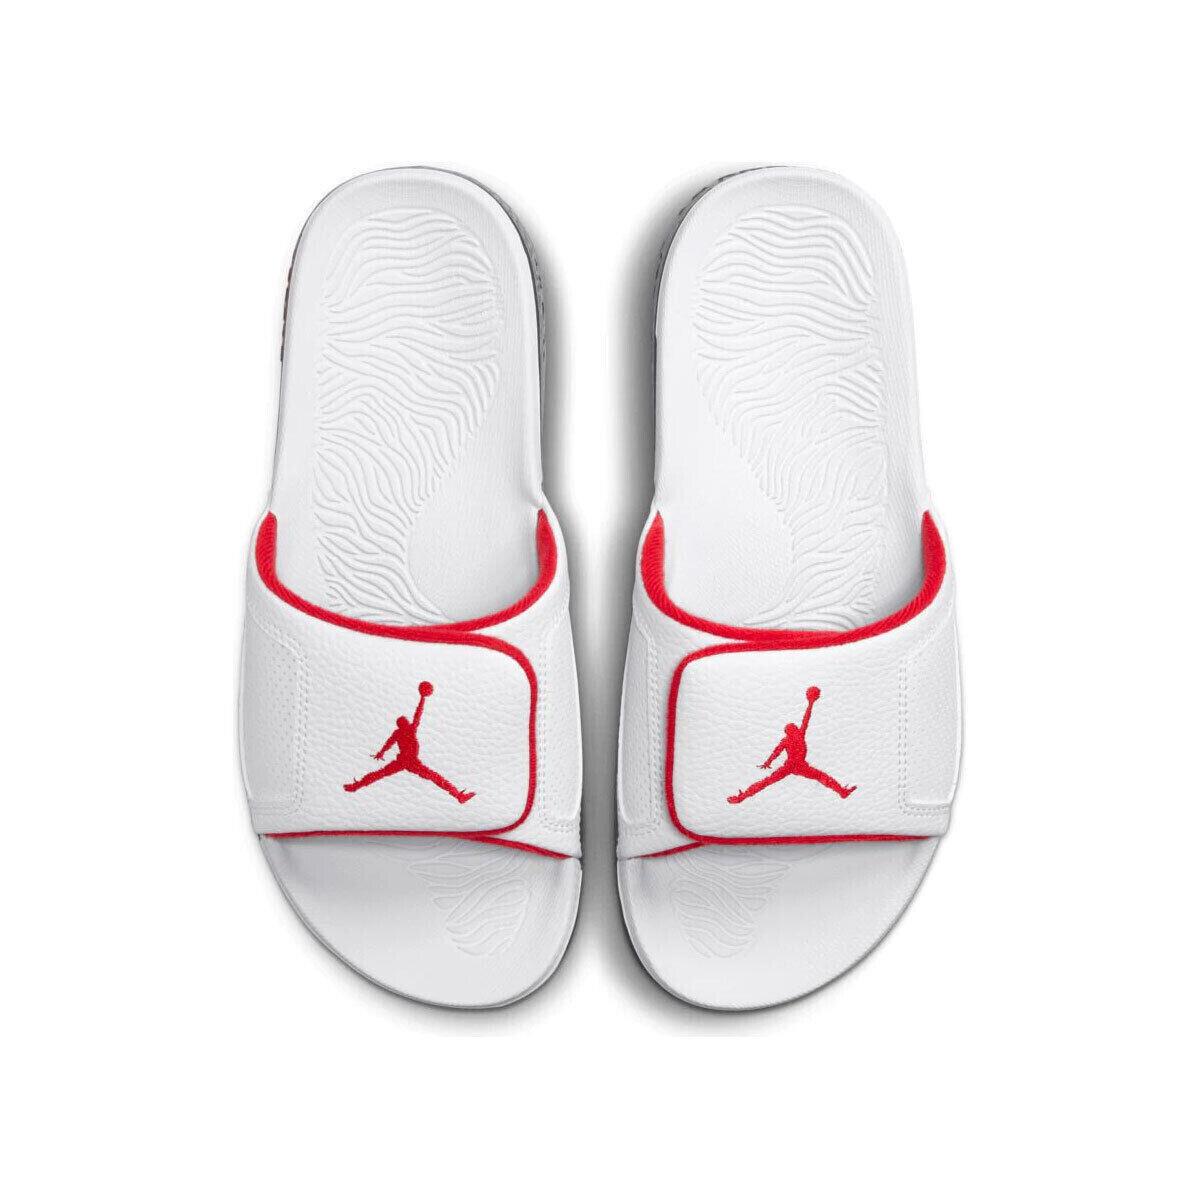 Nike Air Jordan Hydro Iii 3 Retro White Red Slides 854556 103 - Size 13 Mens